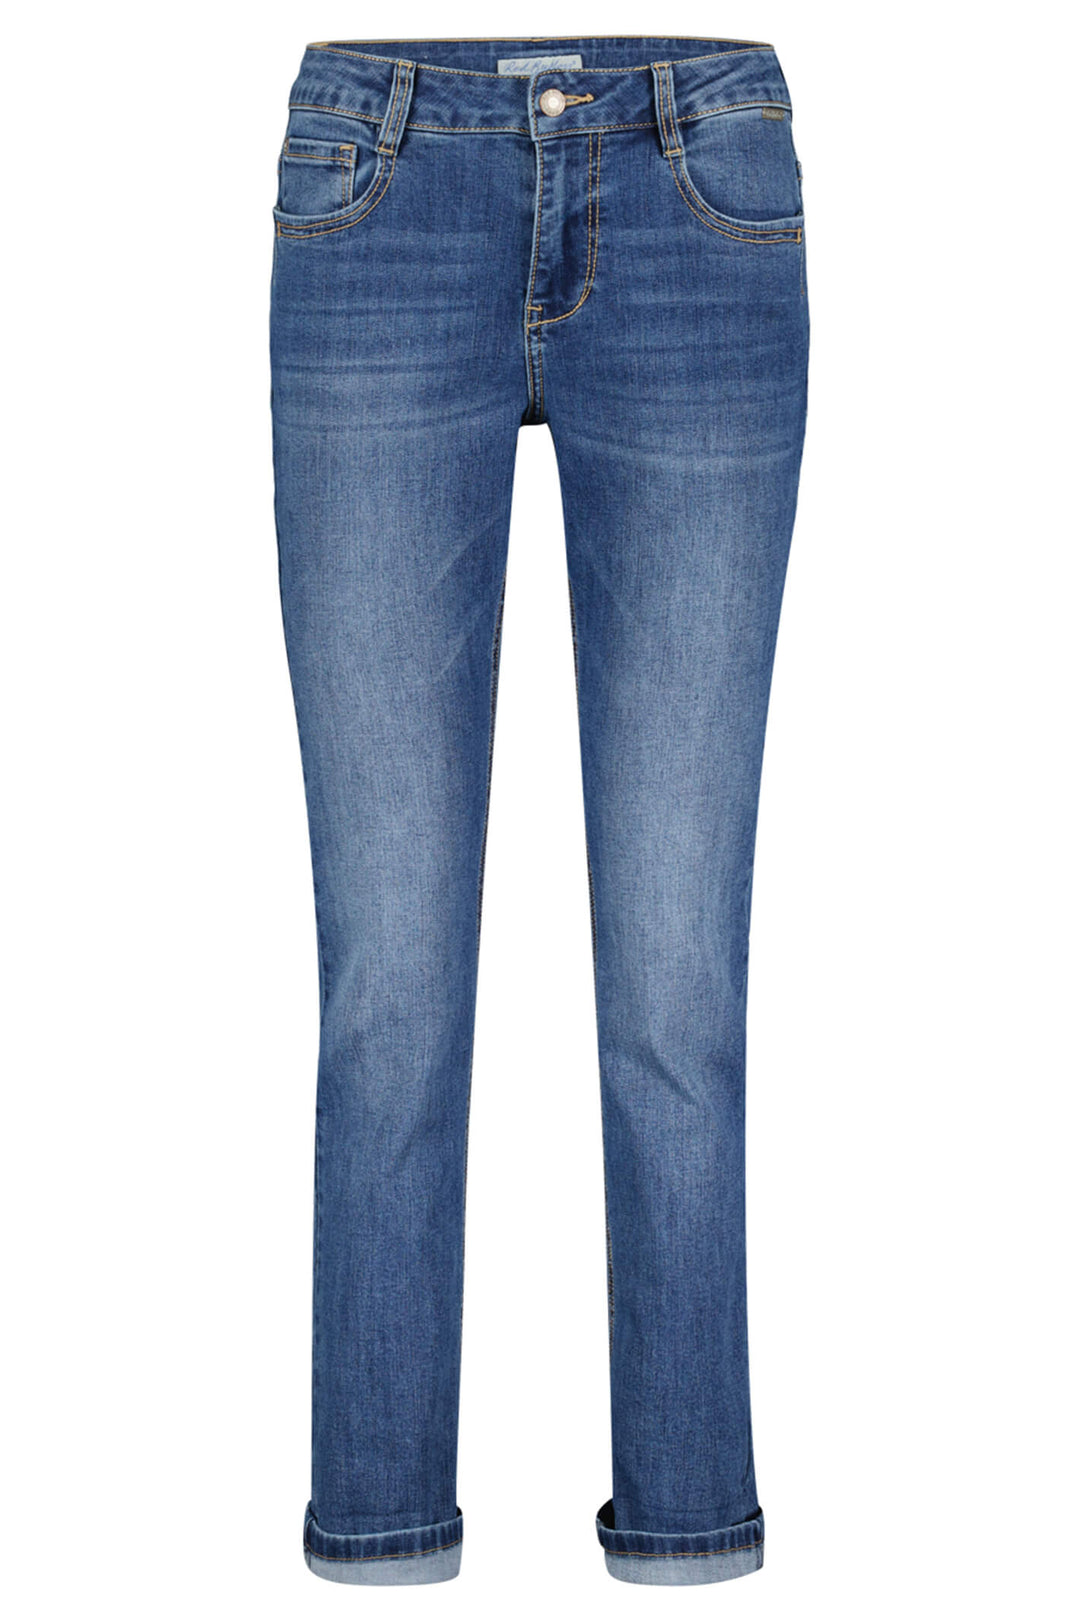 Red Button SRB4056 Kate Blue Turn Up Denim Jeans - Olivia Grace Fashion